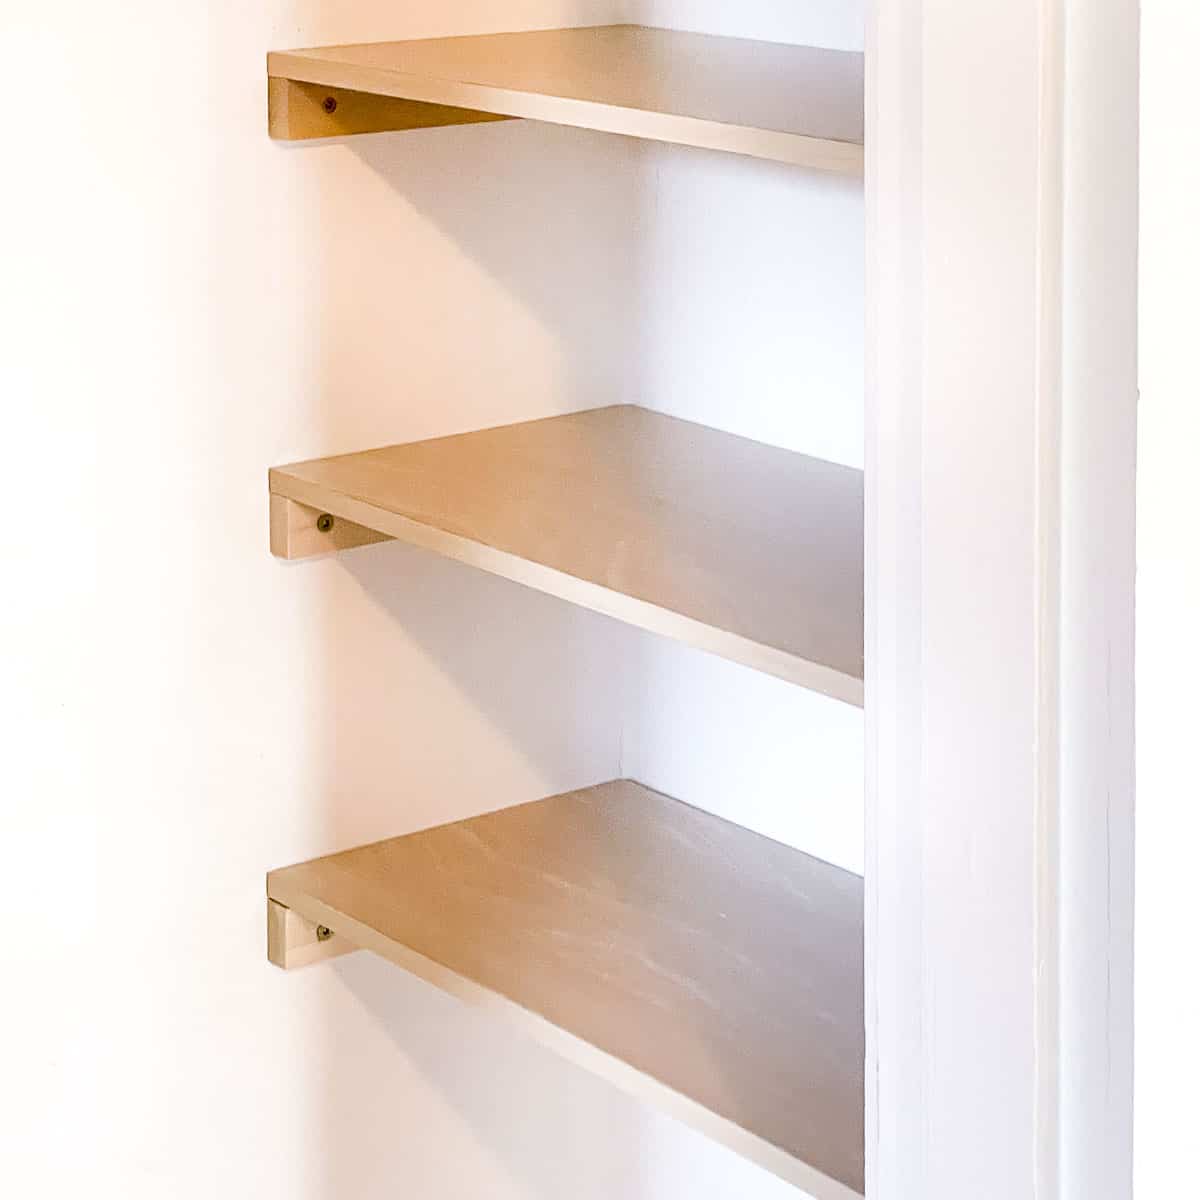 diy closet shelves installed on recessed side of closet